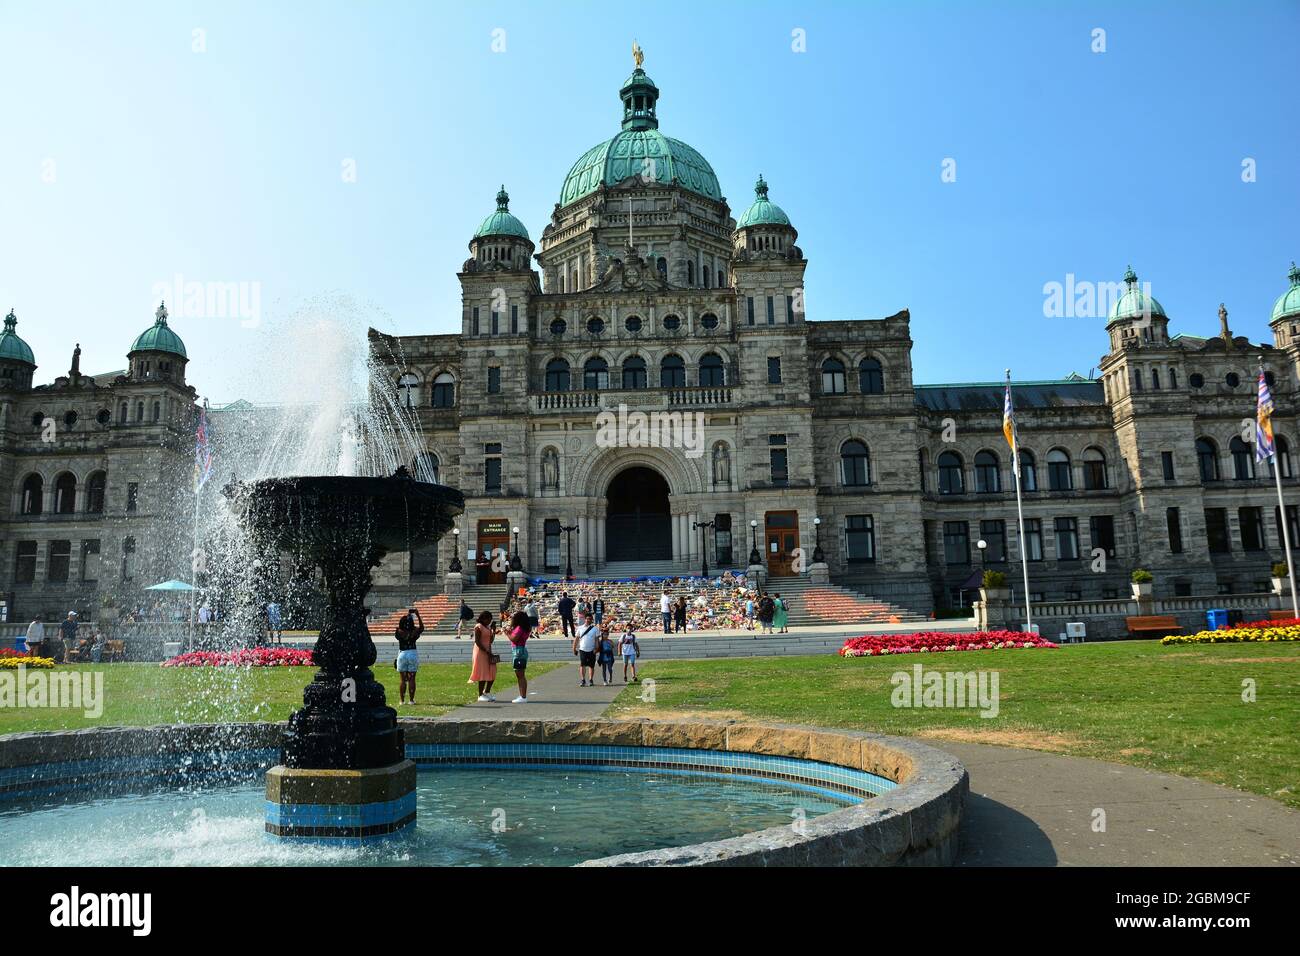 Parliament buildings in Victoria BC, Canada. Stock Photo